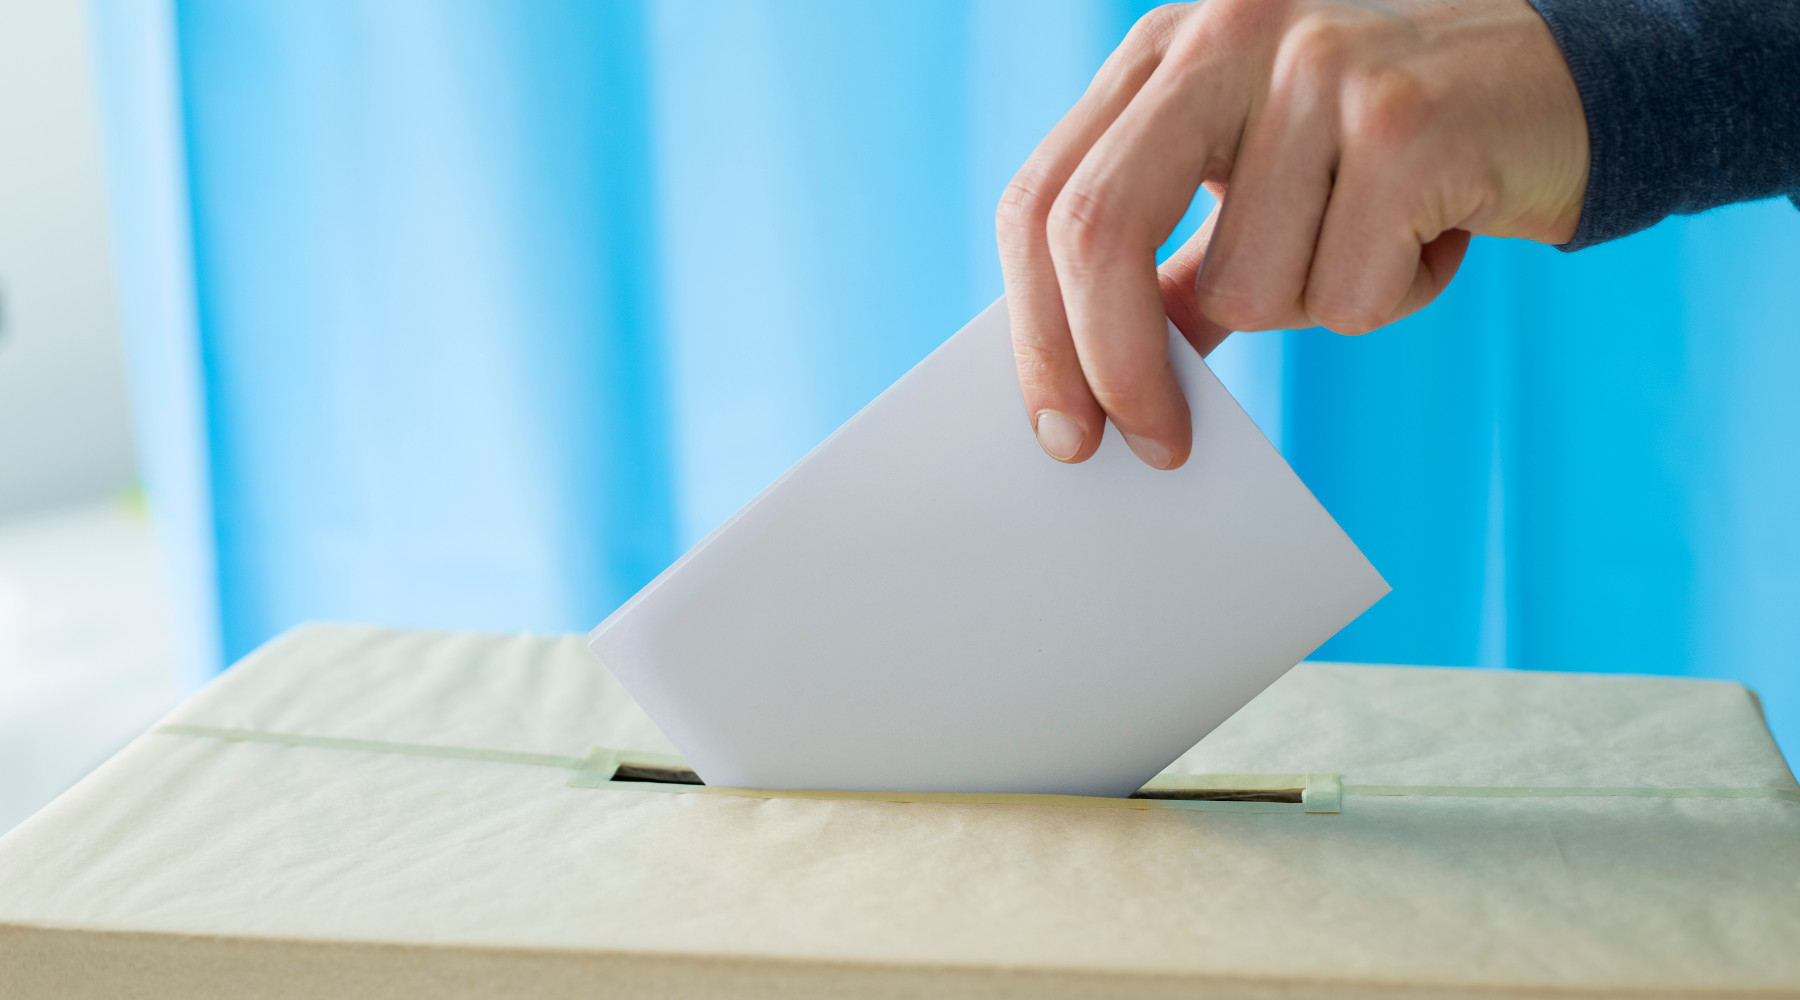 Referendum sulla caccia: mano deposita scheda in urna elettorale